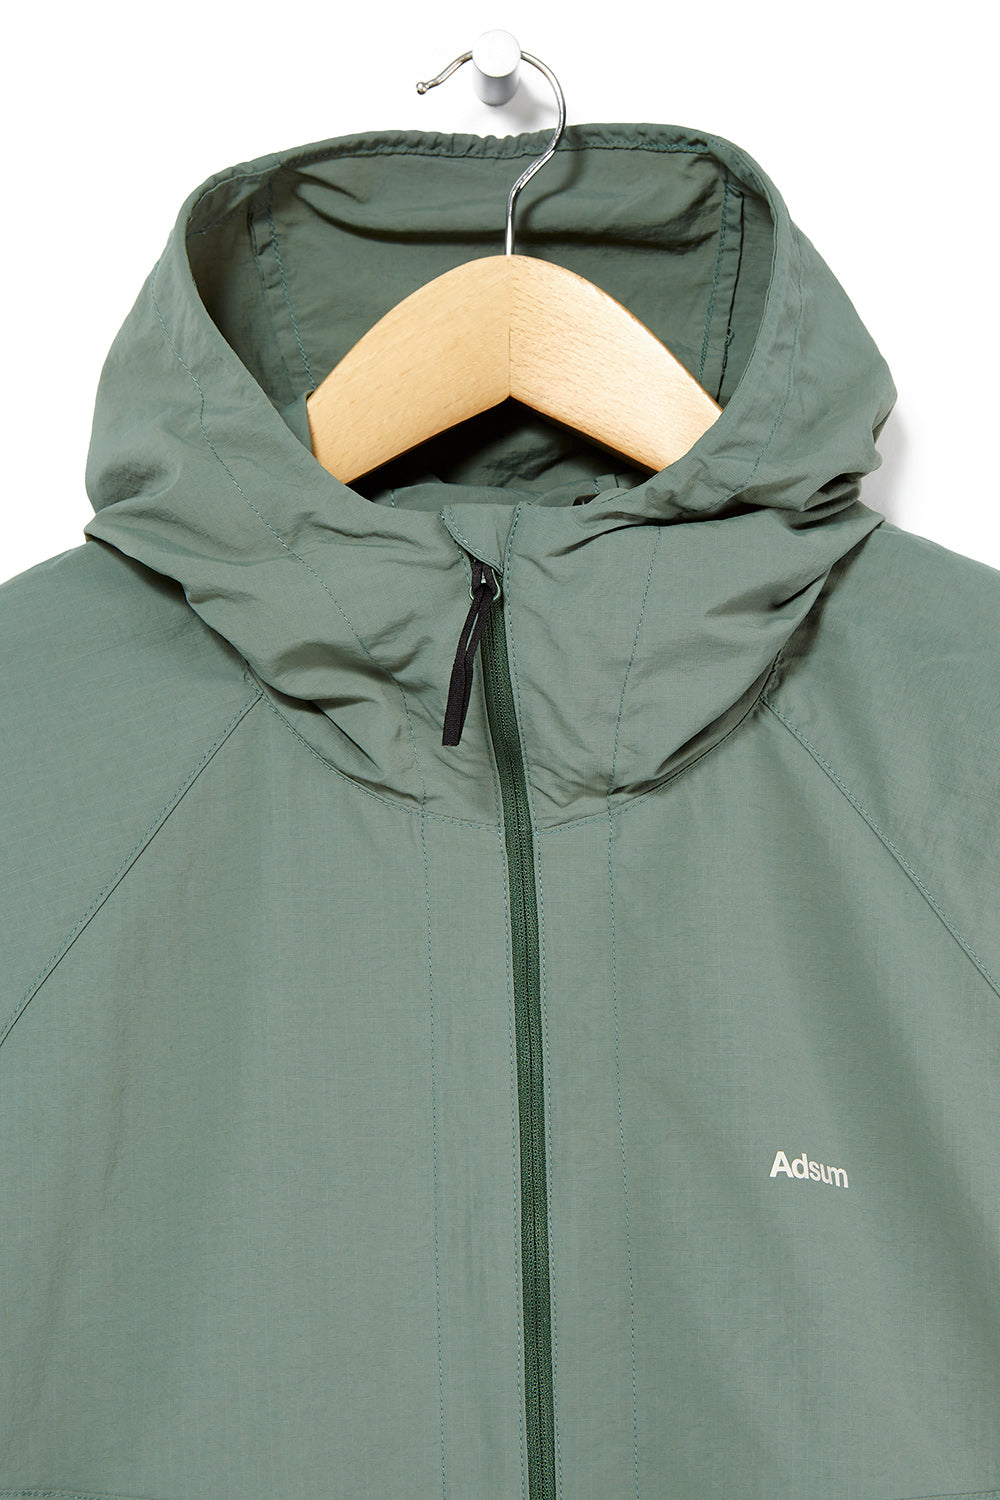 Adsum Men's Caliper Jacket - Gazer Slate – Outsiders Store UK